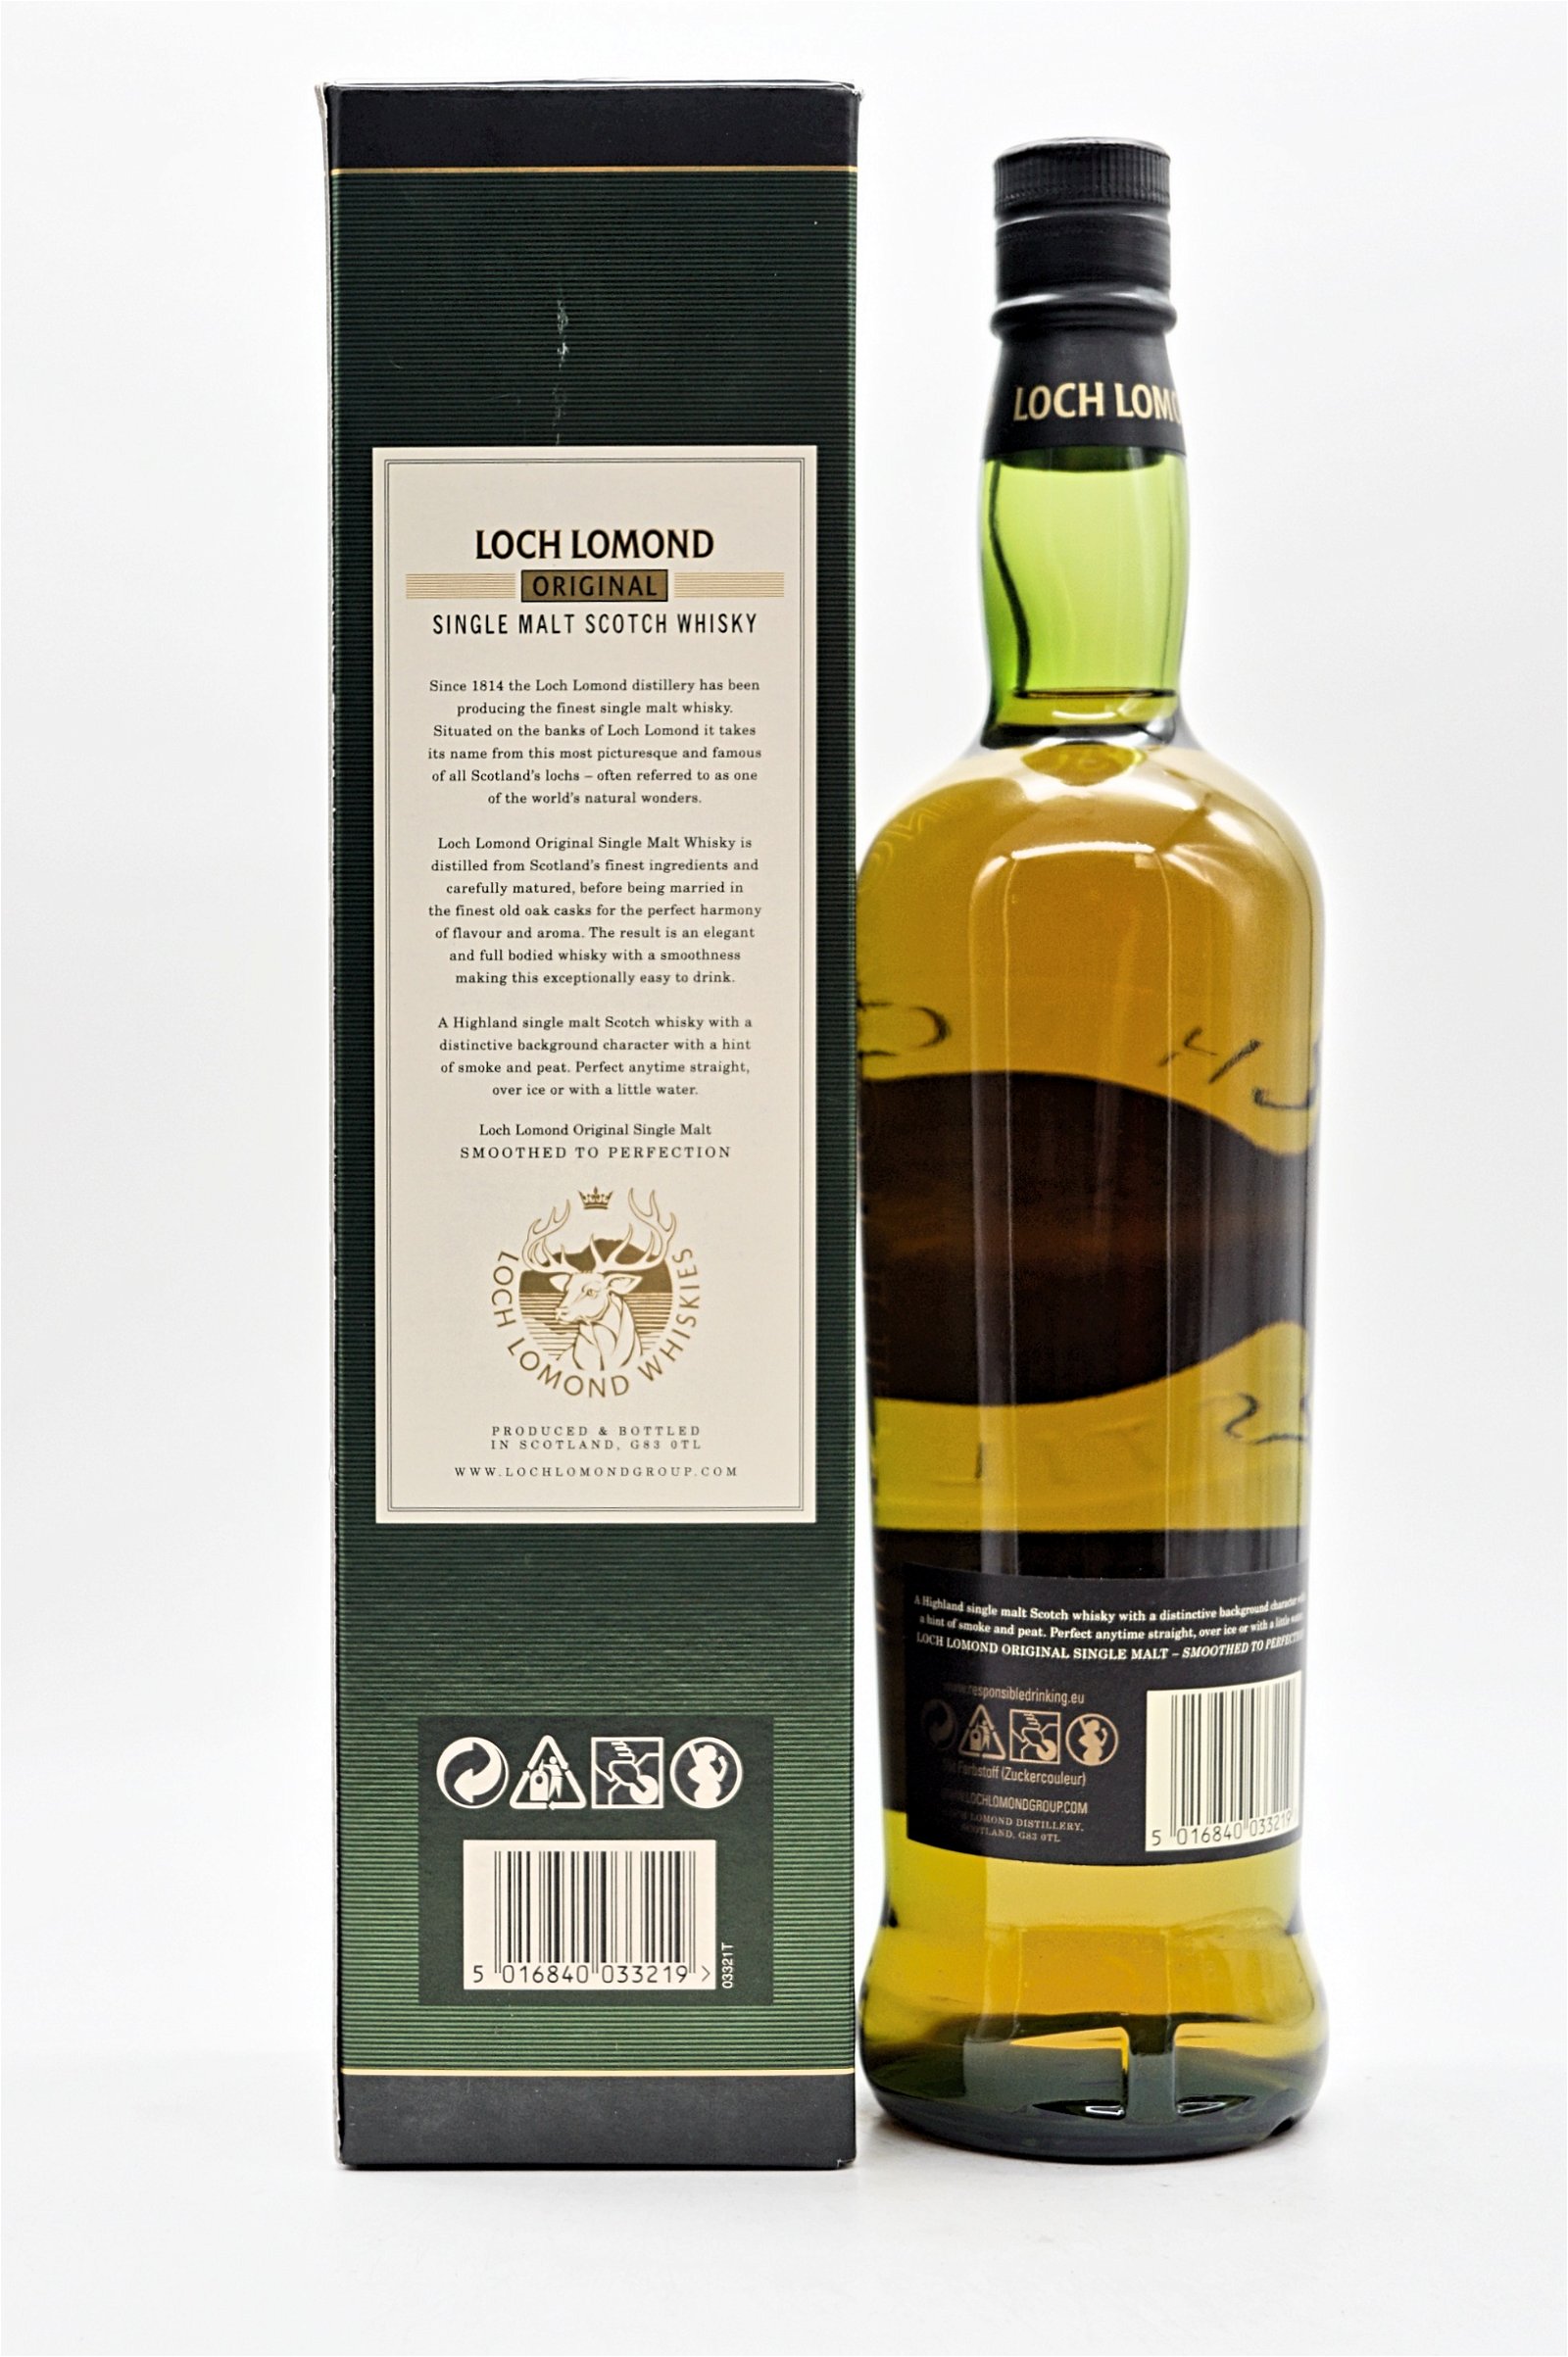 Loch Lomond Whiskies Original Single Malt Scotch Whisky